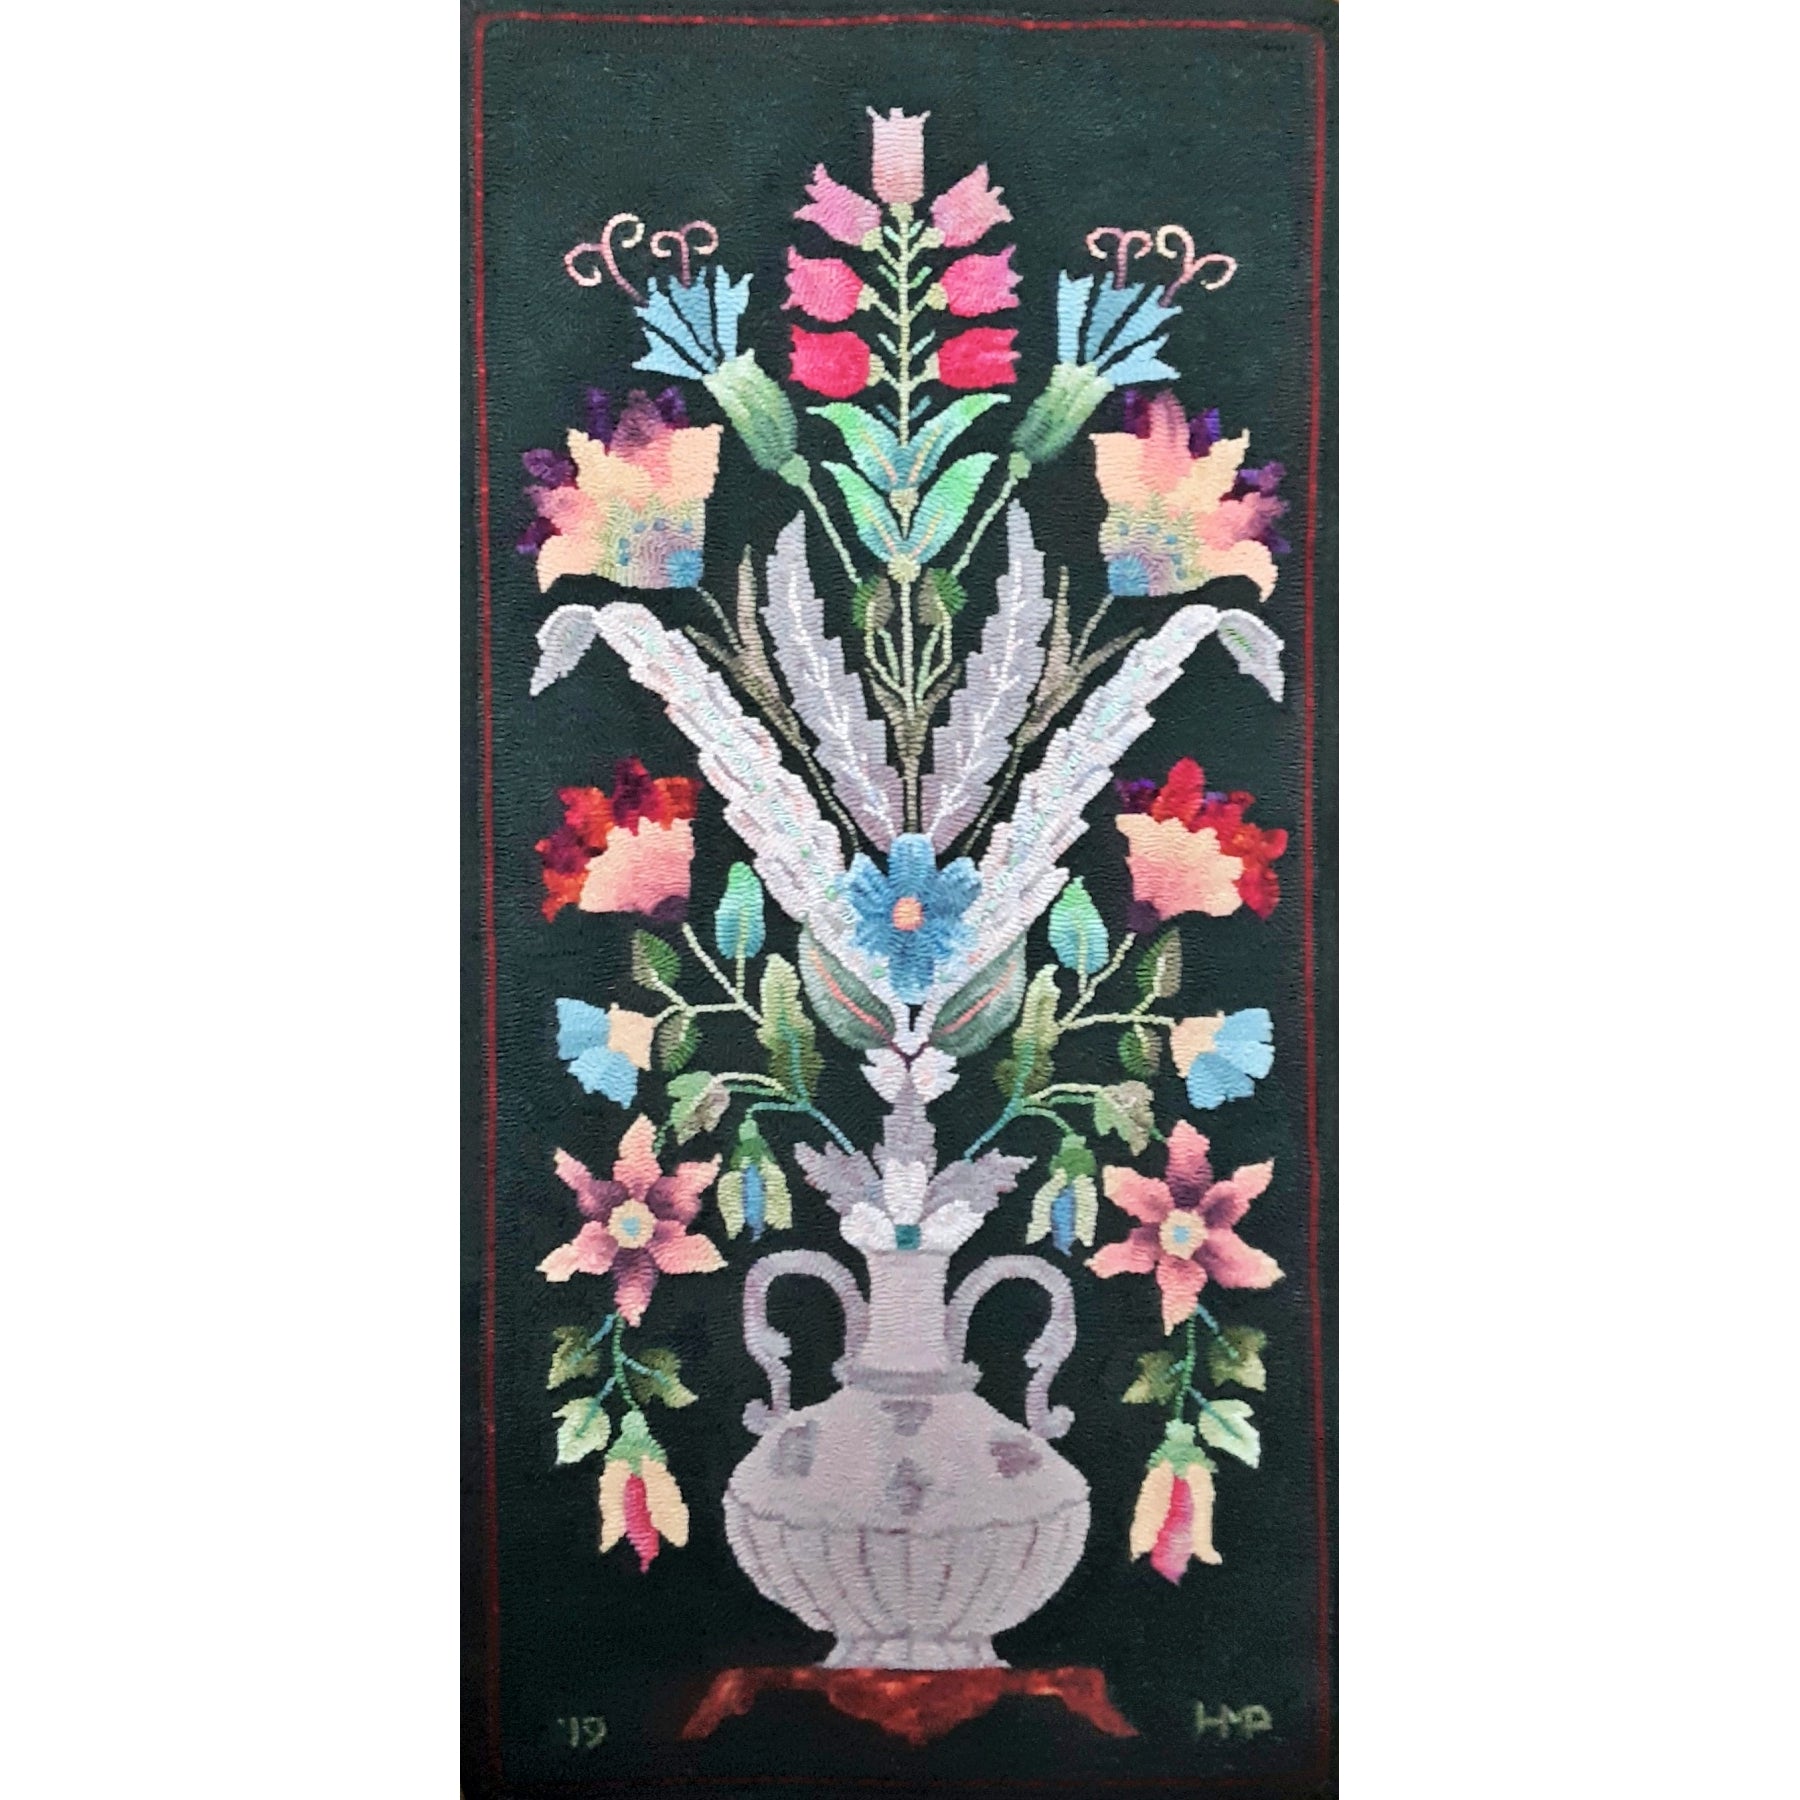 Collinot Vase, rug hooked by Helen Mar Parkin